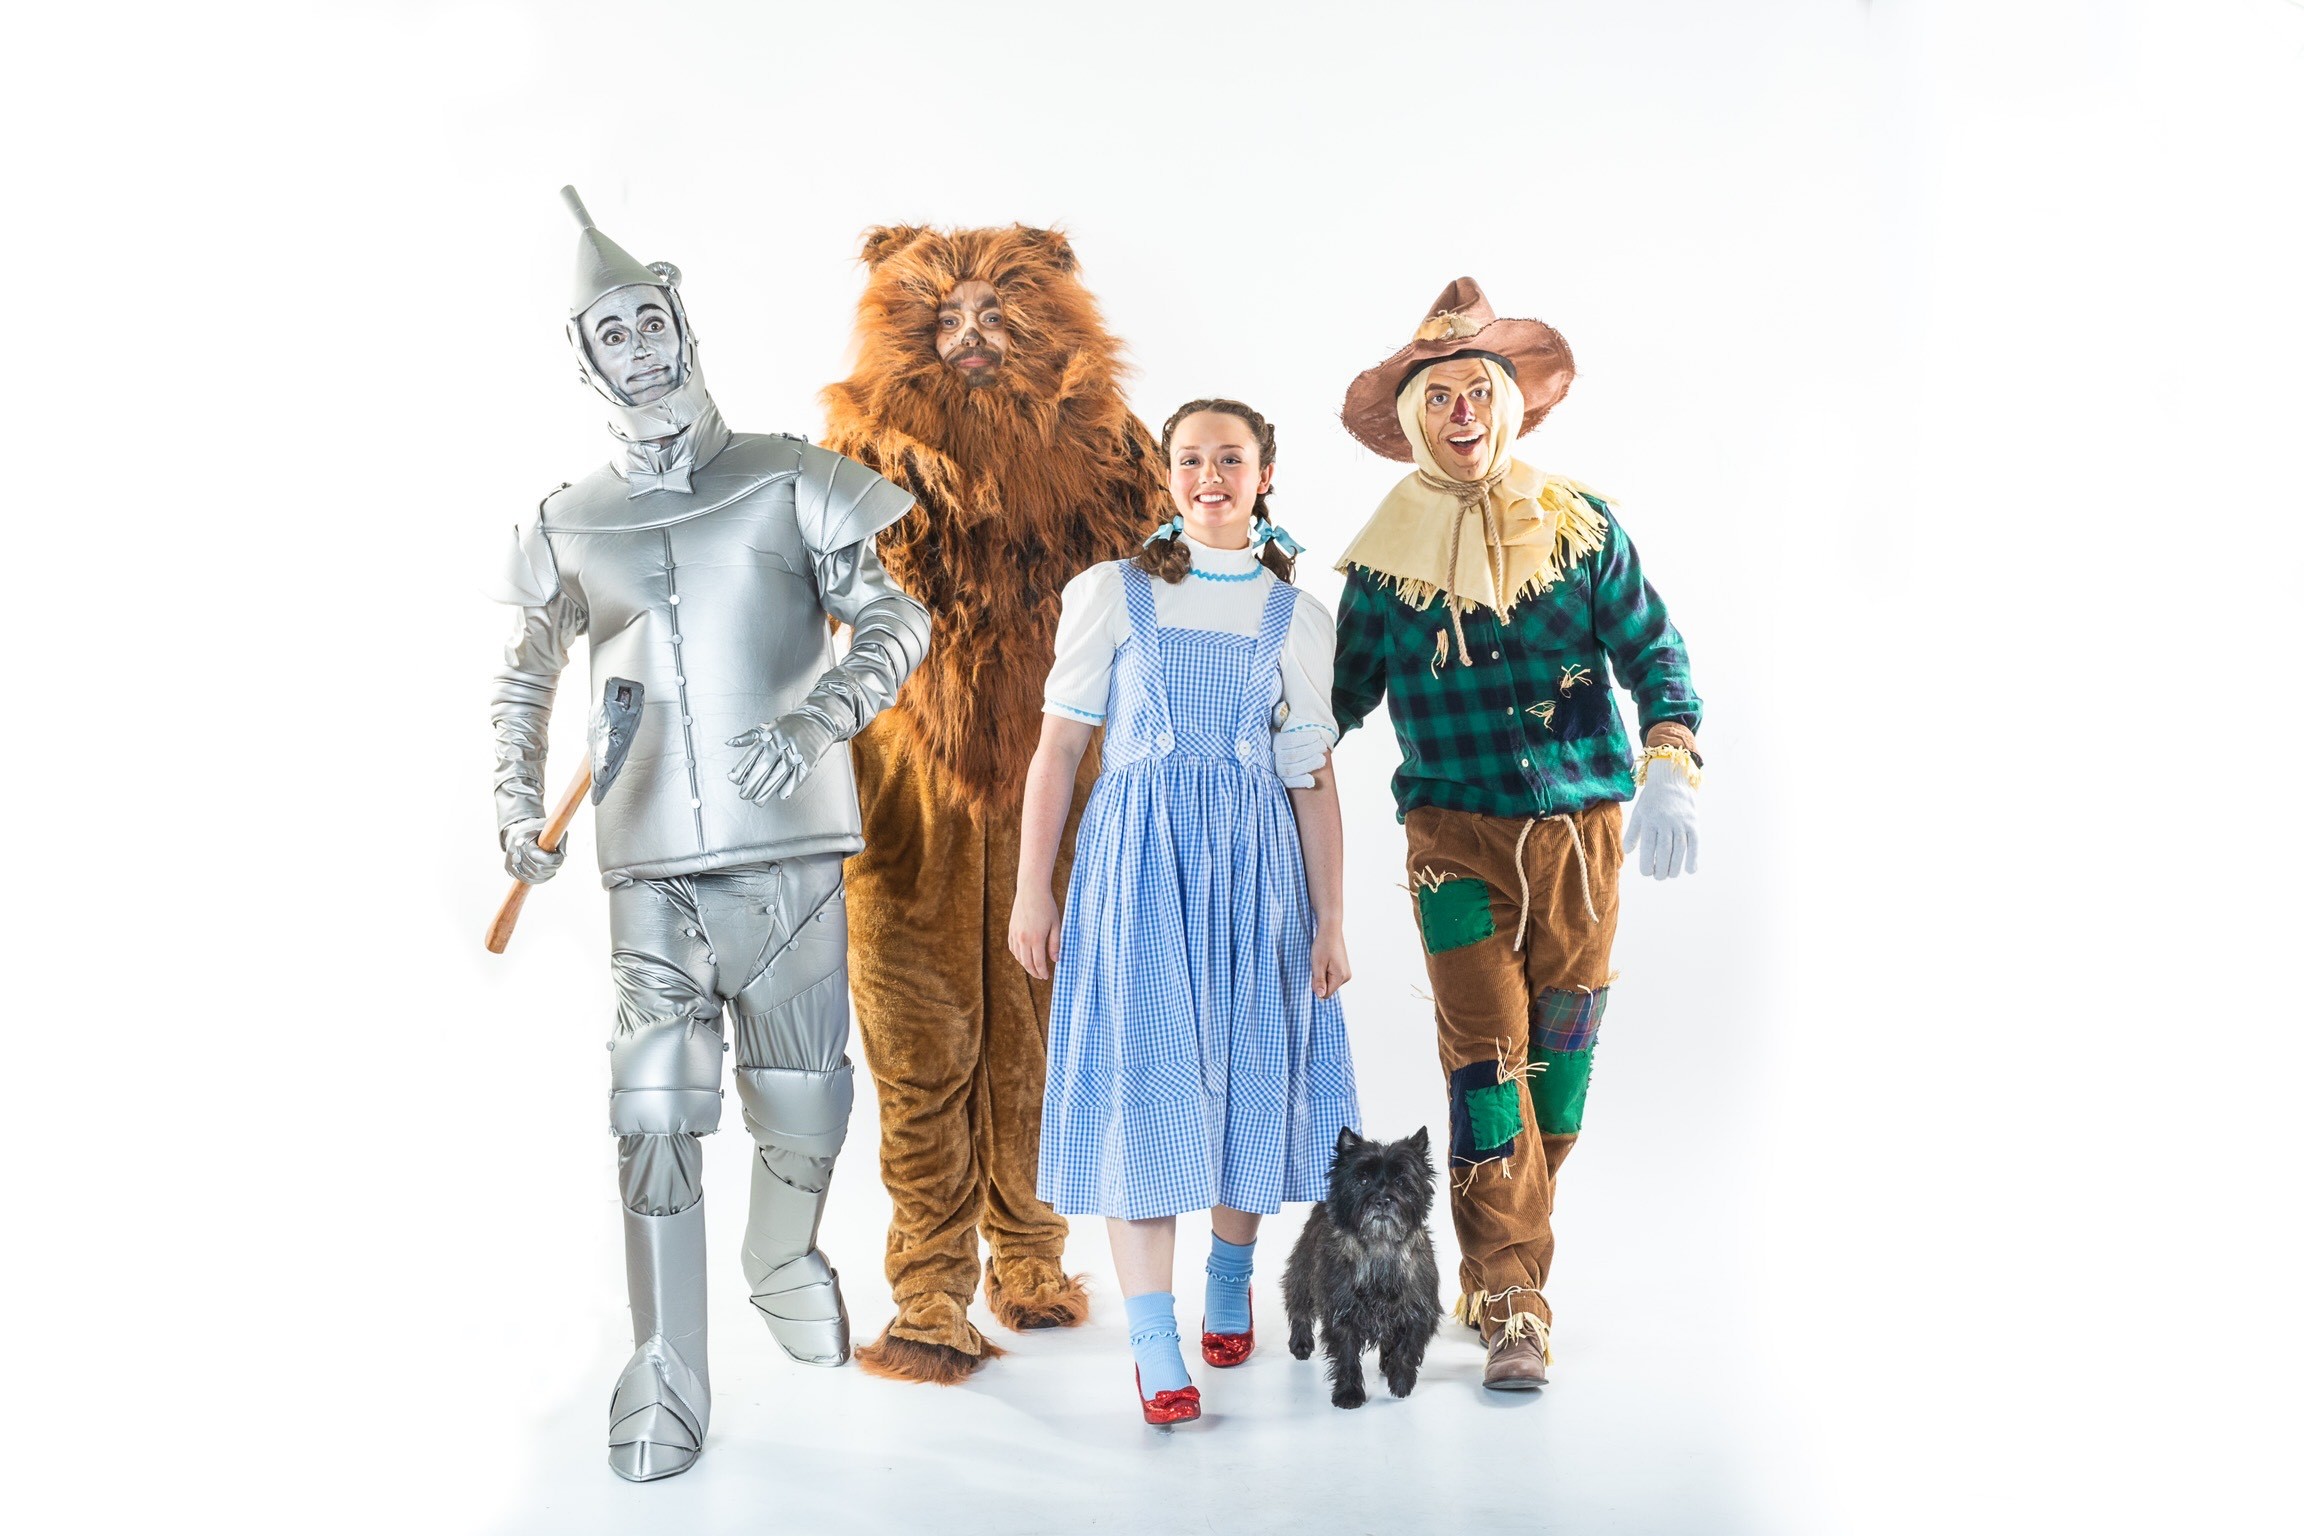 CTORA Theatre Wizard of Oz Article Image 2023